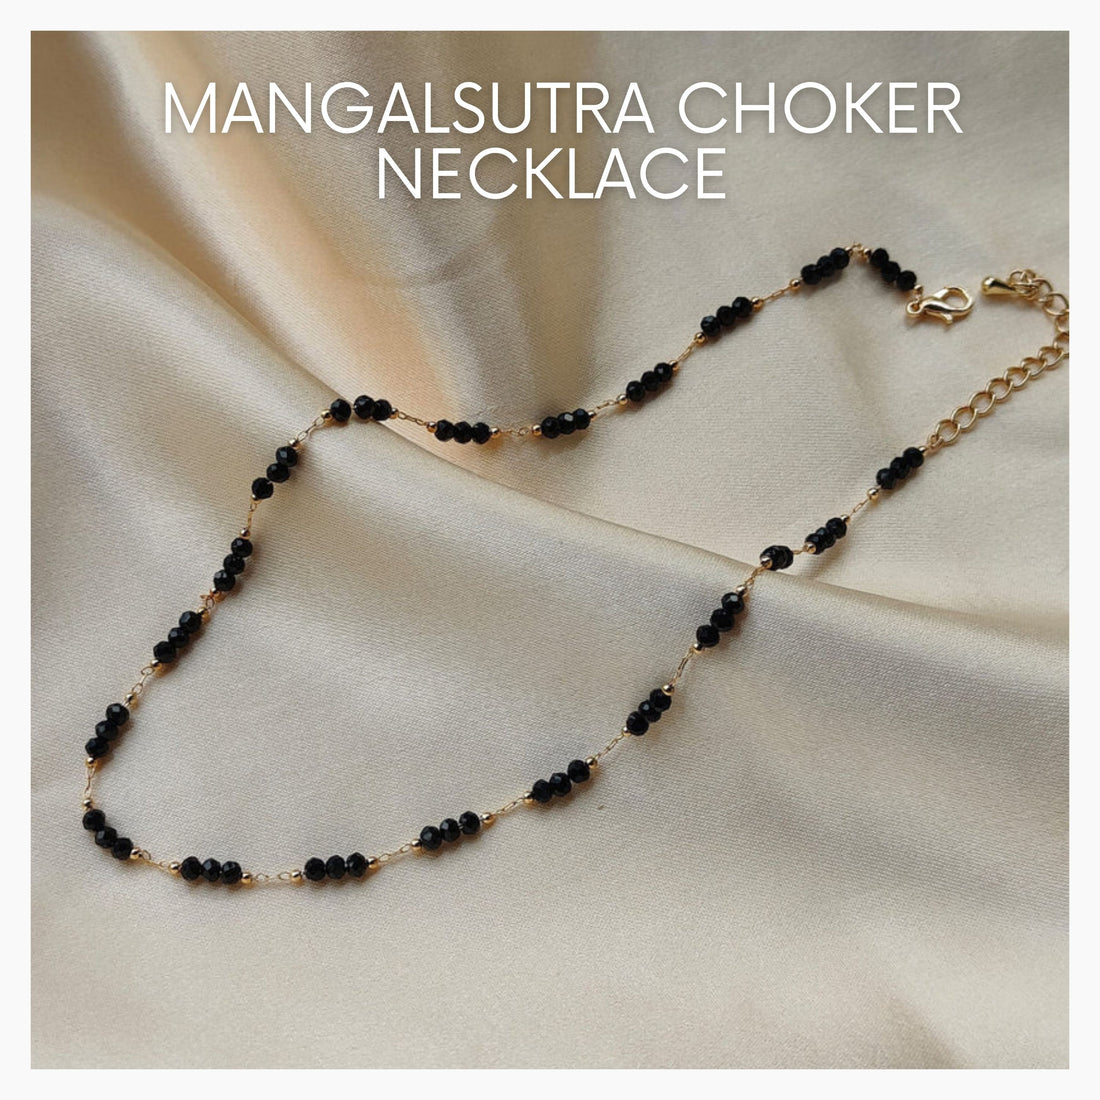  Mangalsutra Choker Necklace